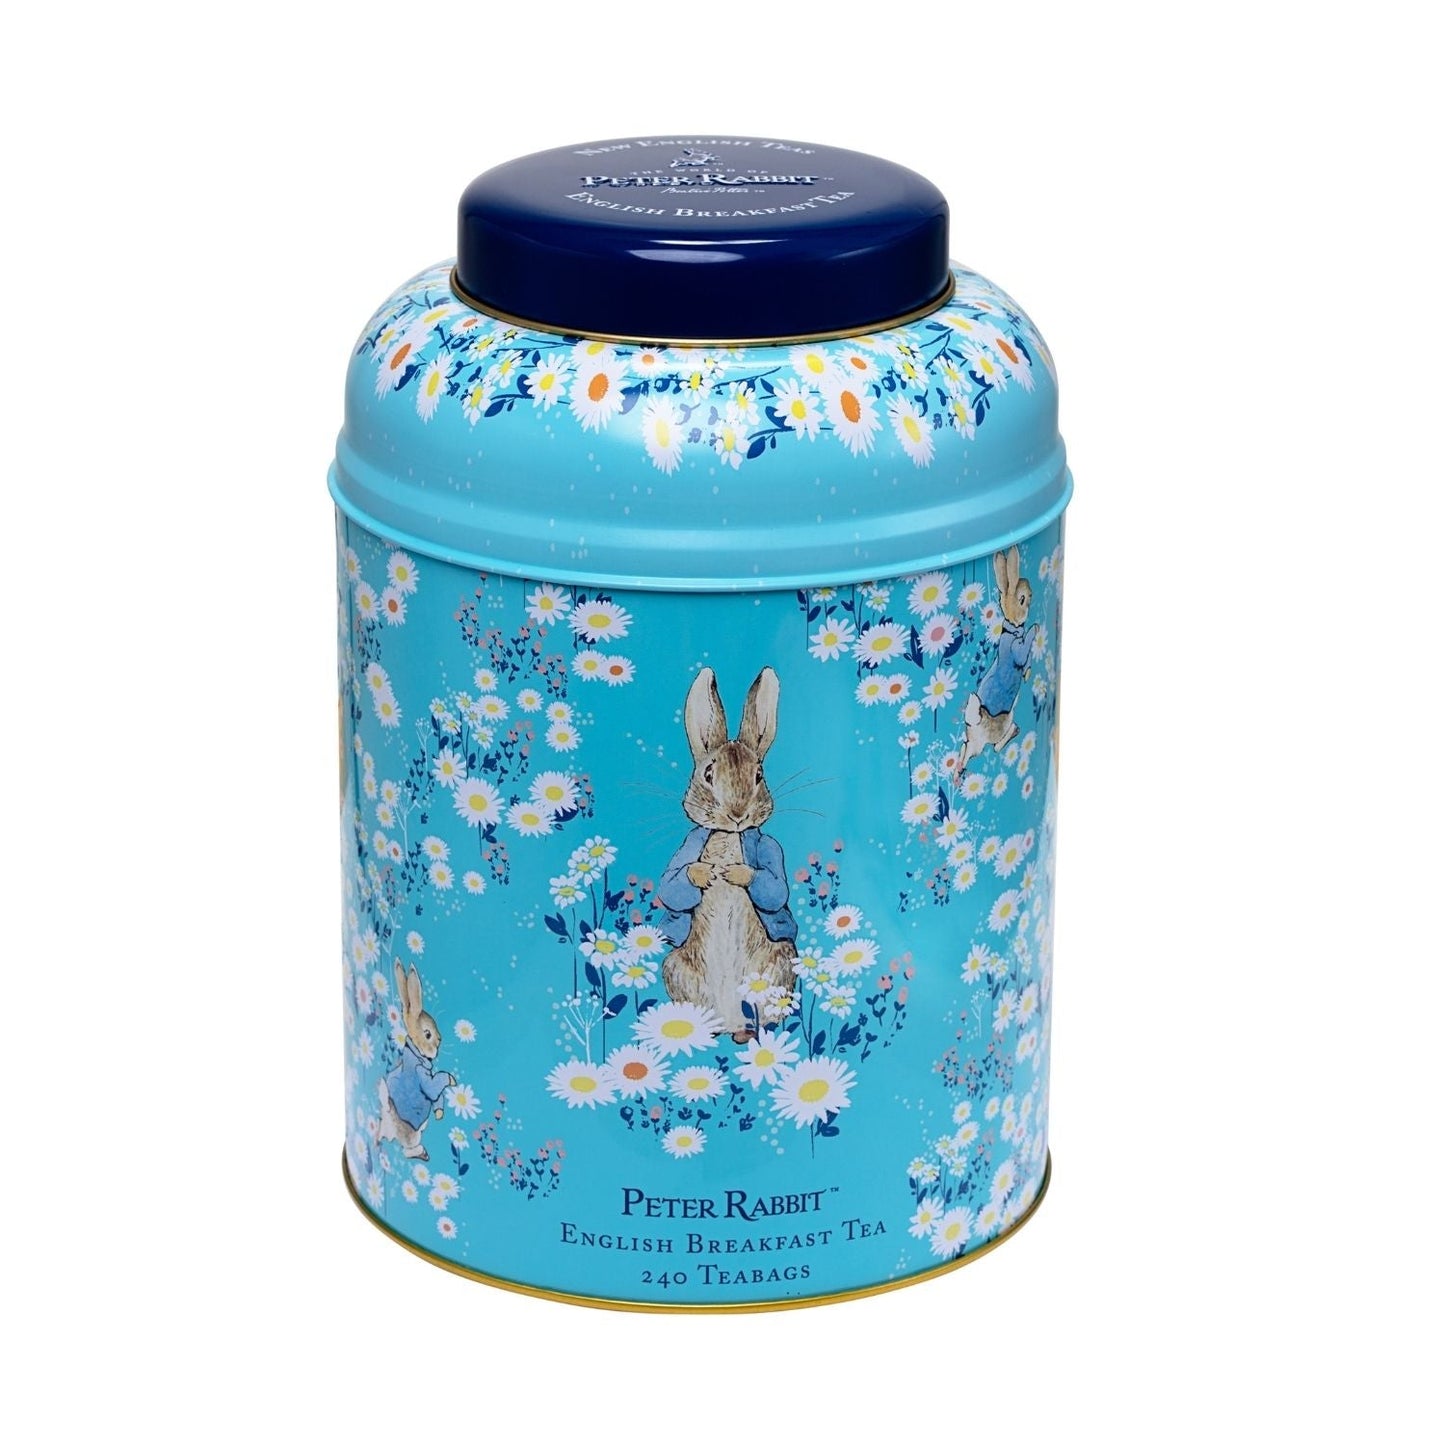 Peter Rabbit's Daisies Tea Caddy with 240 English Breakfast teabags Black Tea New English Teas 